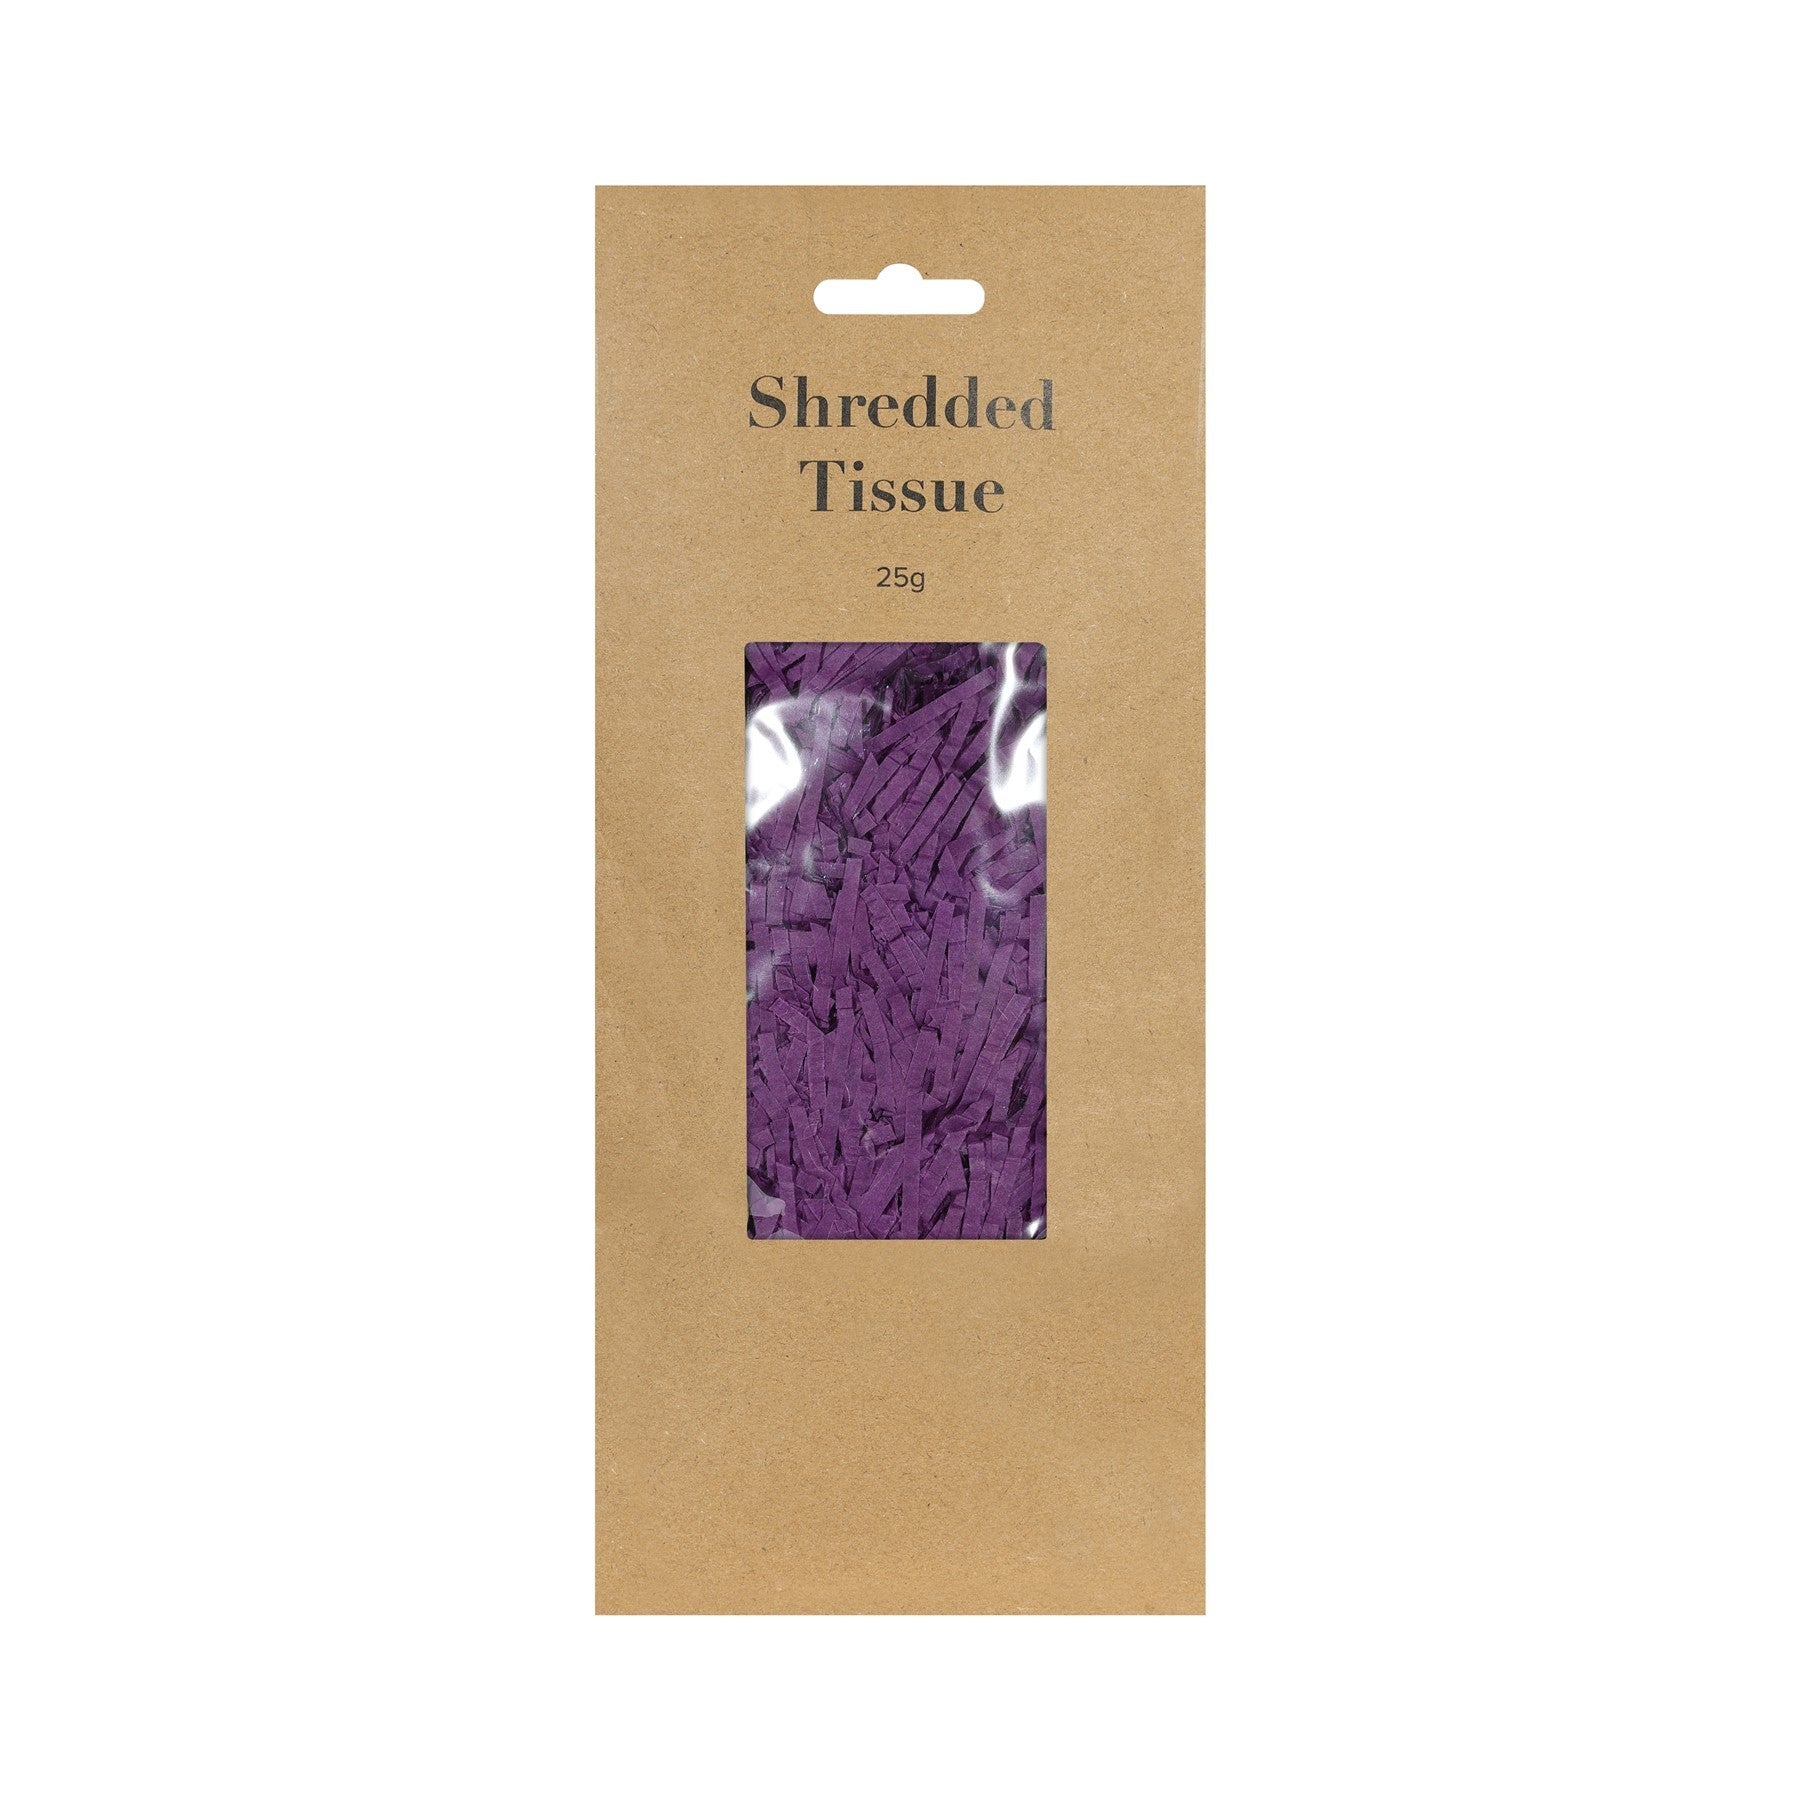 View Violet Shredded Tissue 25 grams information